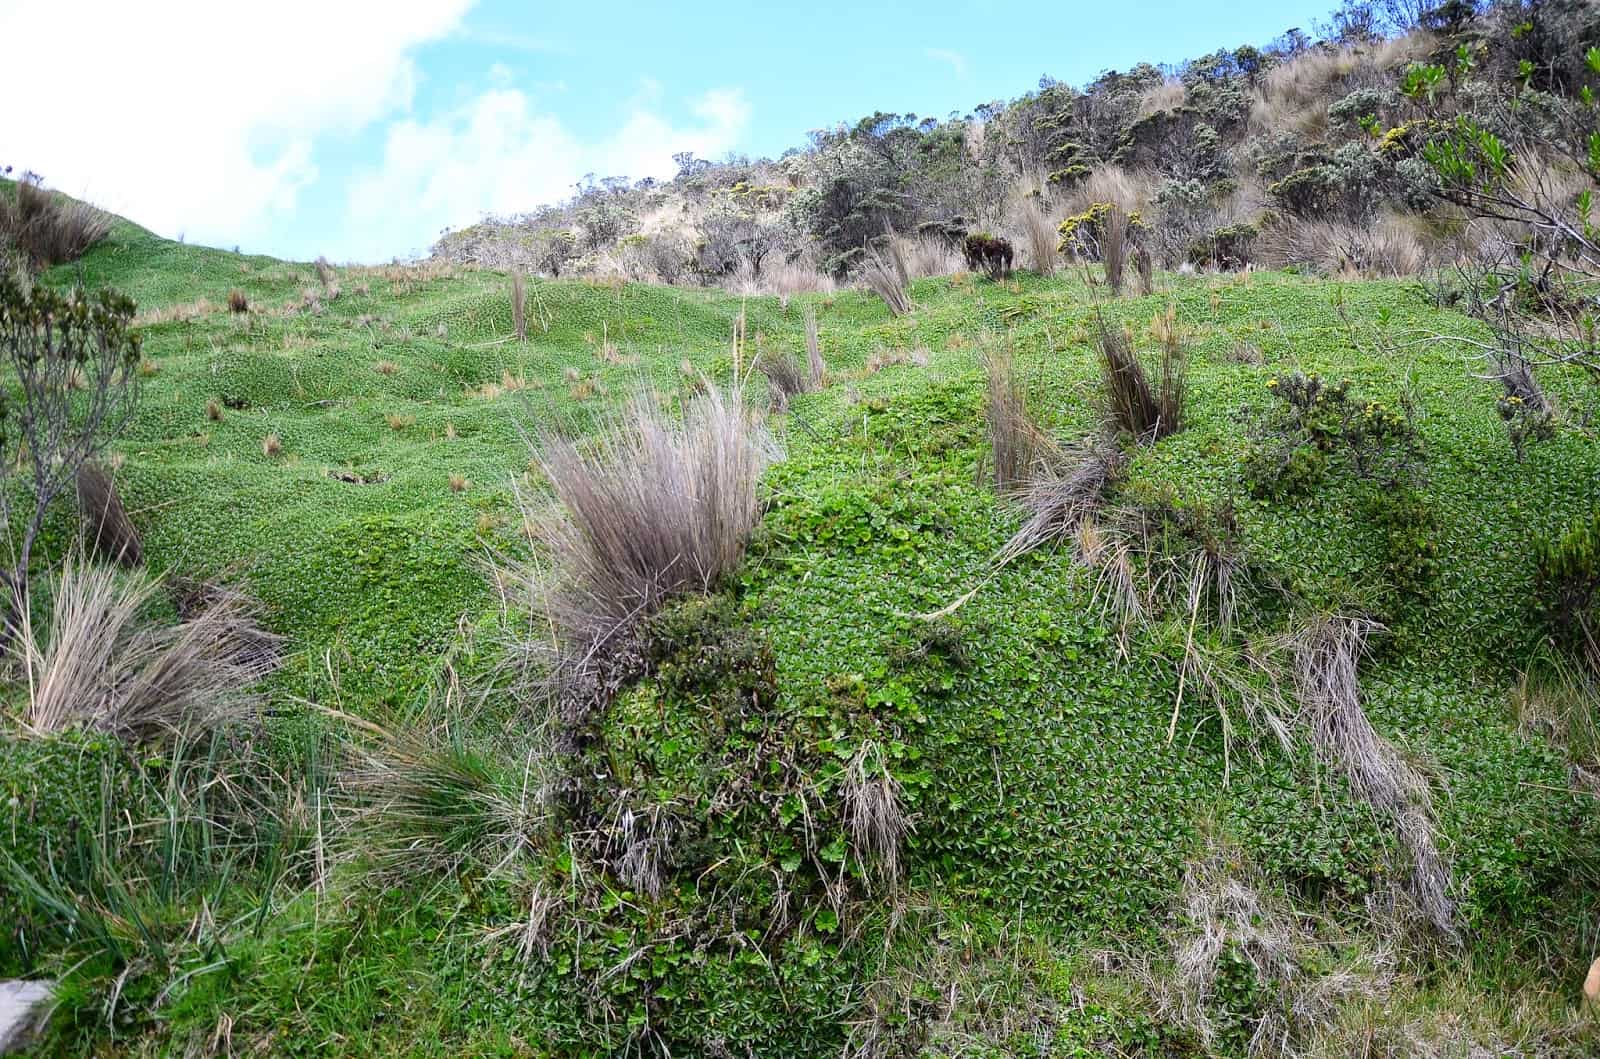 Interesting vegetation at Los Nevados National Park in Colombia